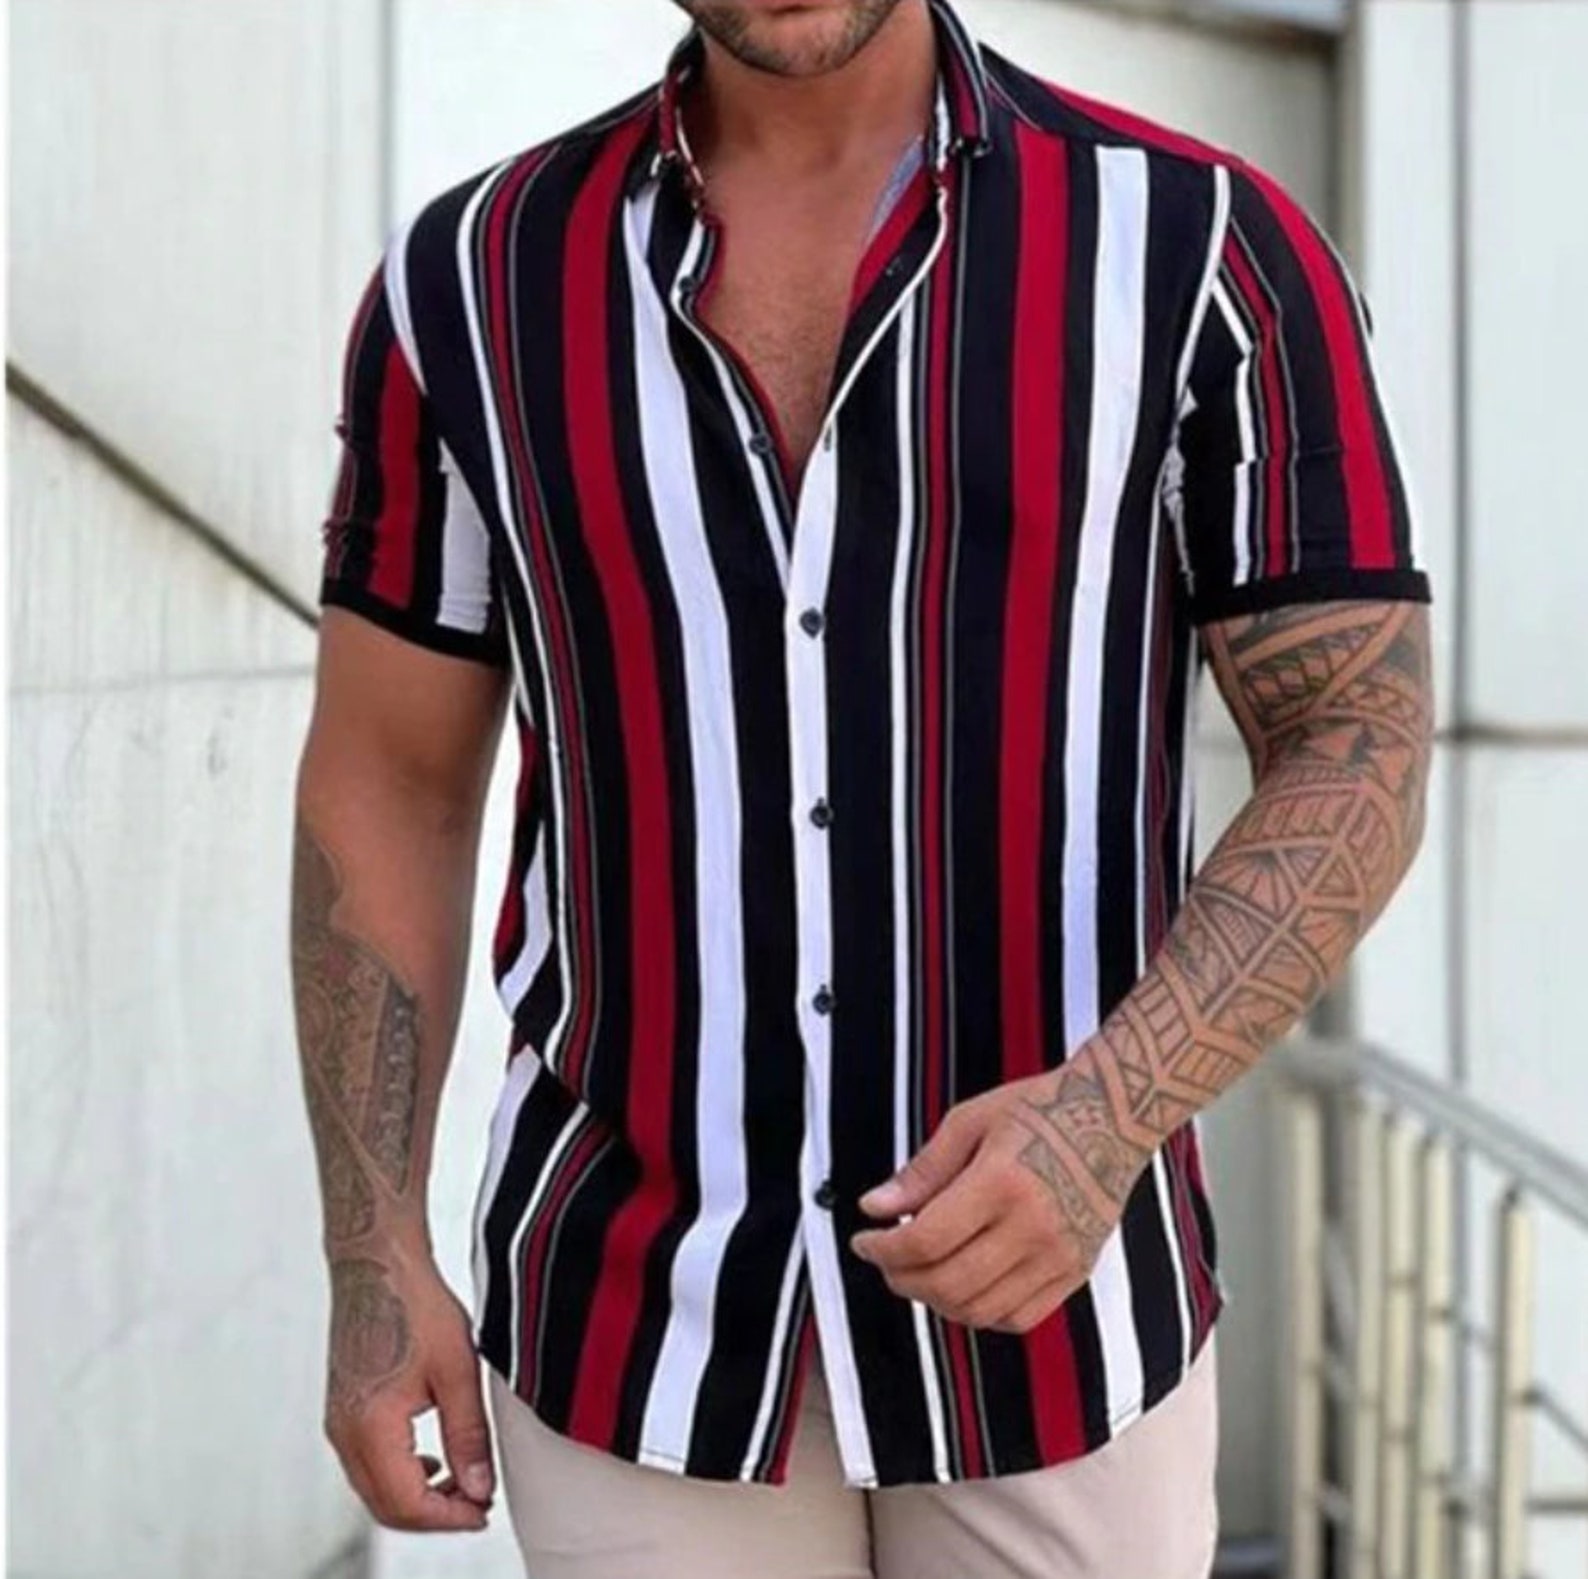 Men's Shirt Fashion Stripes Print Short Sleeve Shirt - Etsy